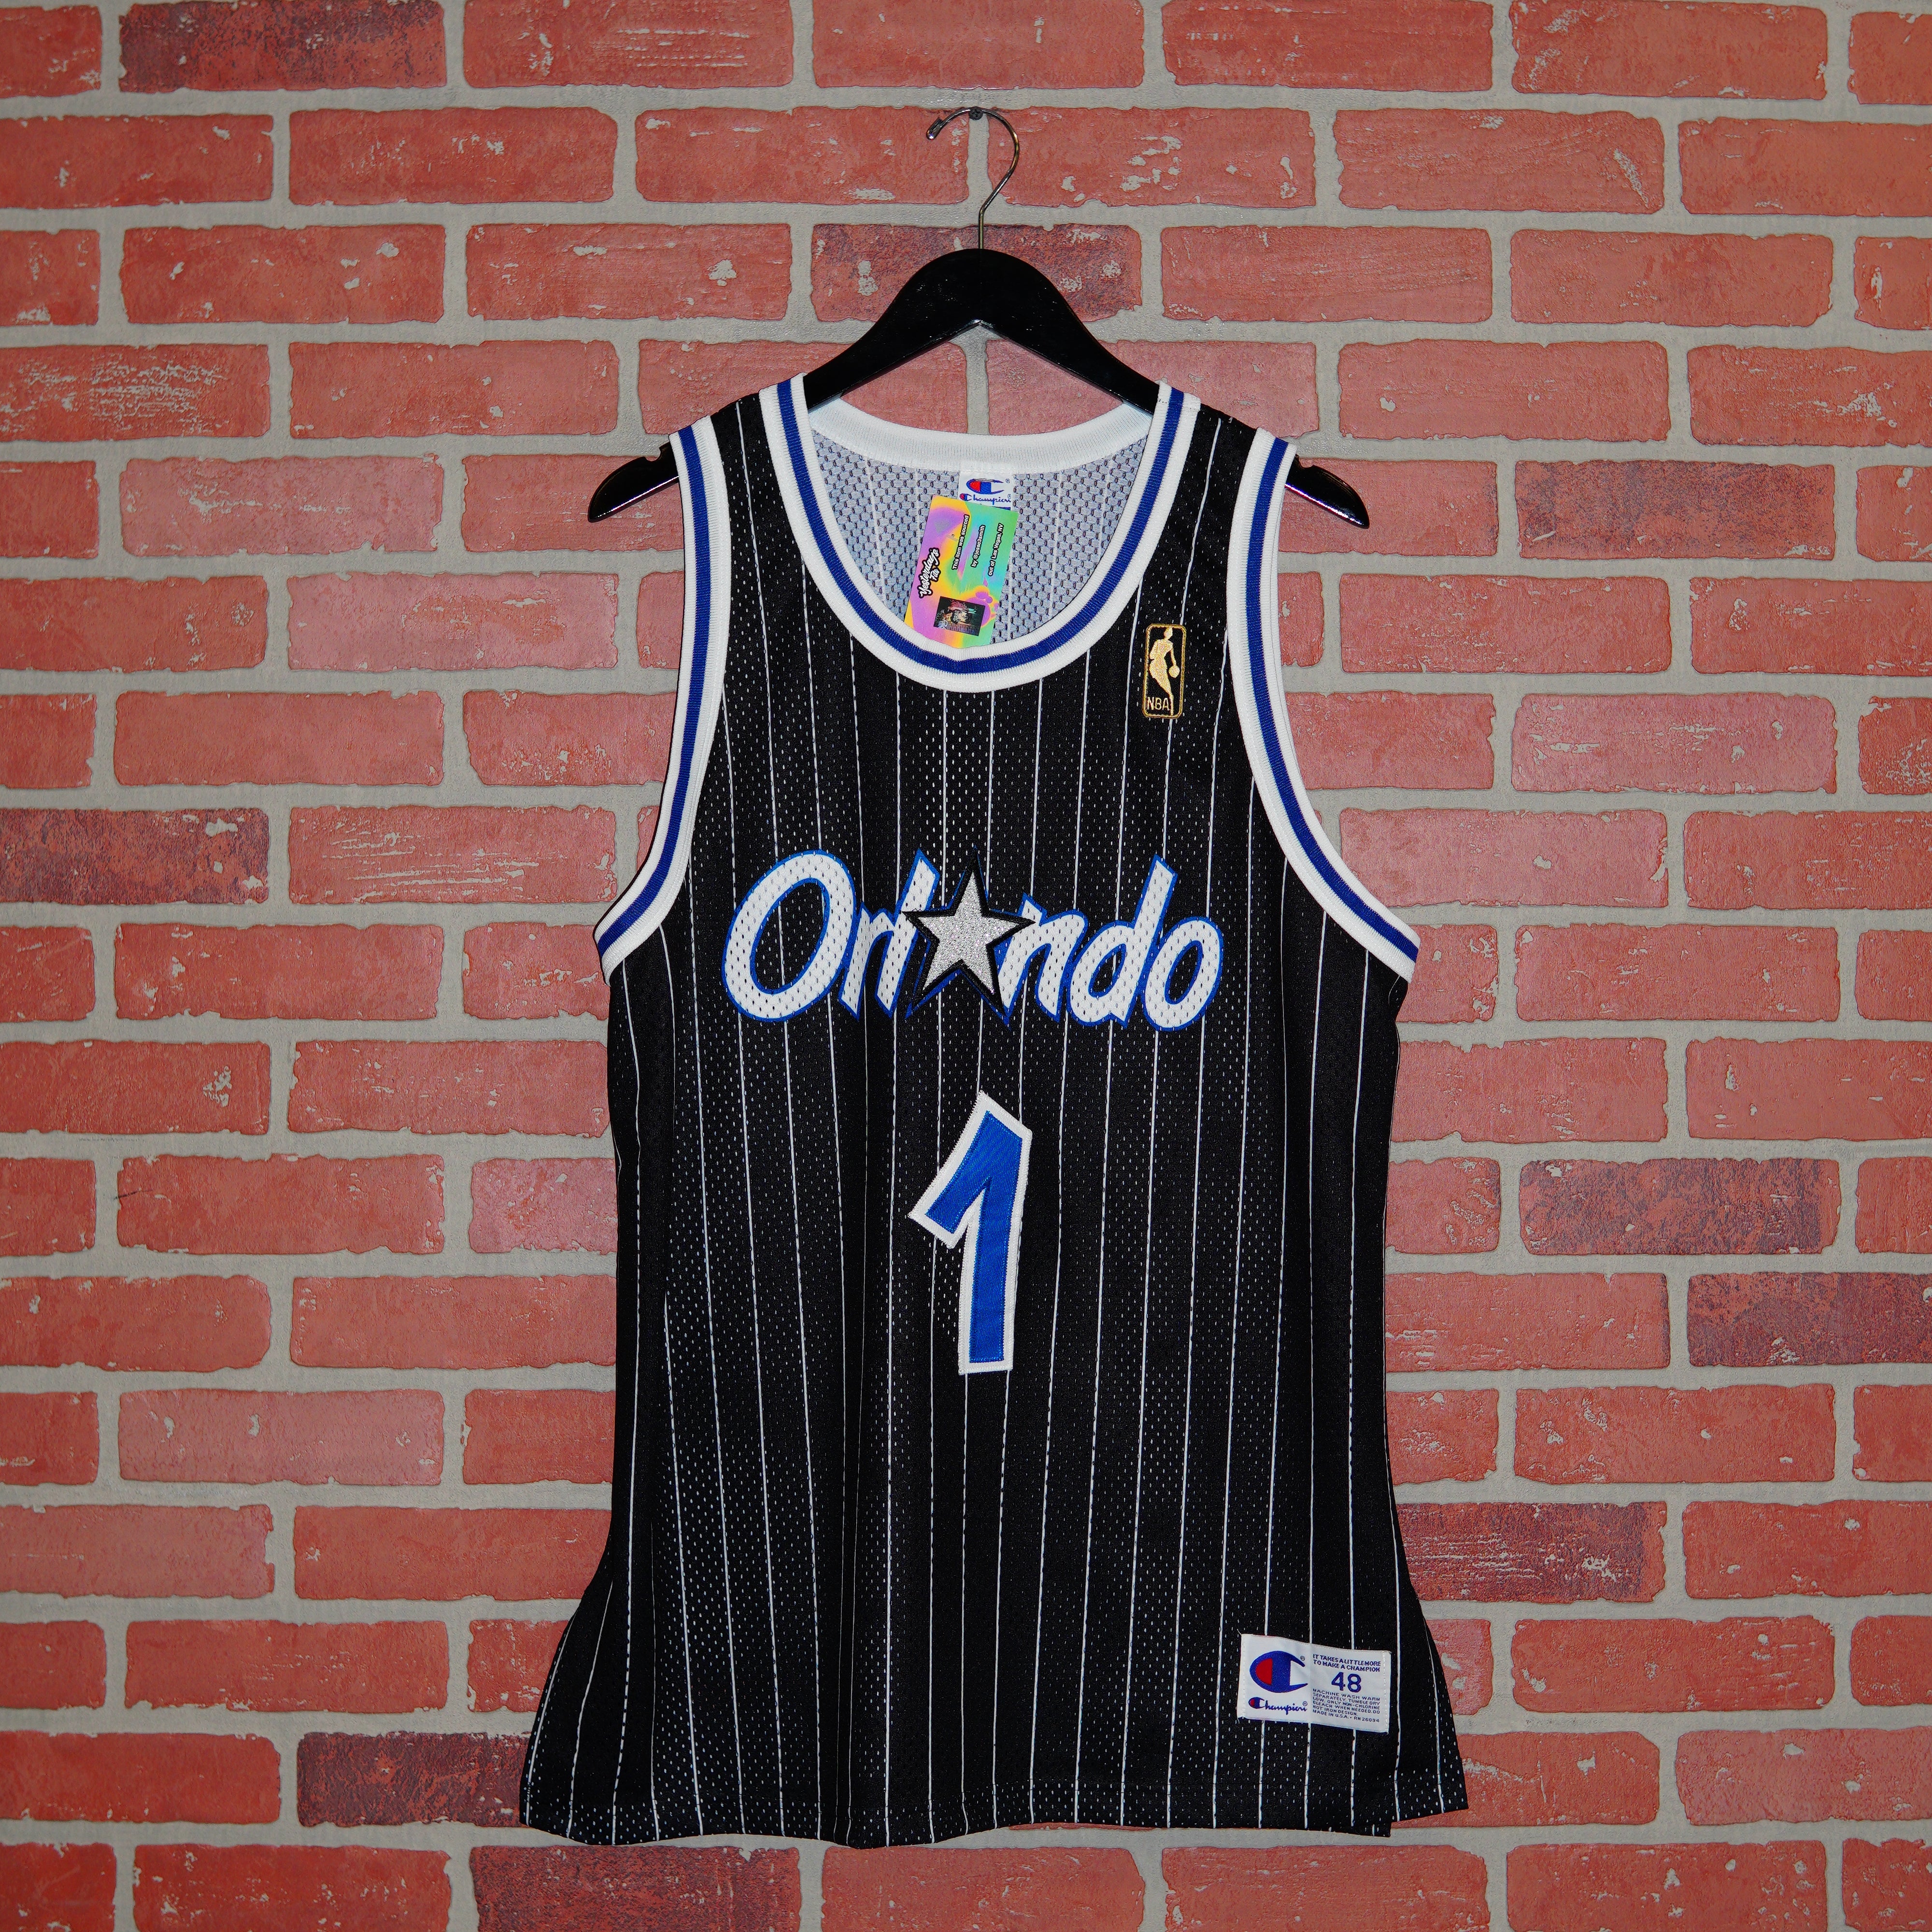 NBA Jersey Orlando Magic Penny Hardaway Champion Size 48 XL 